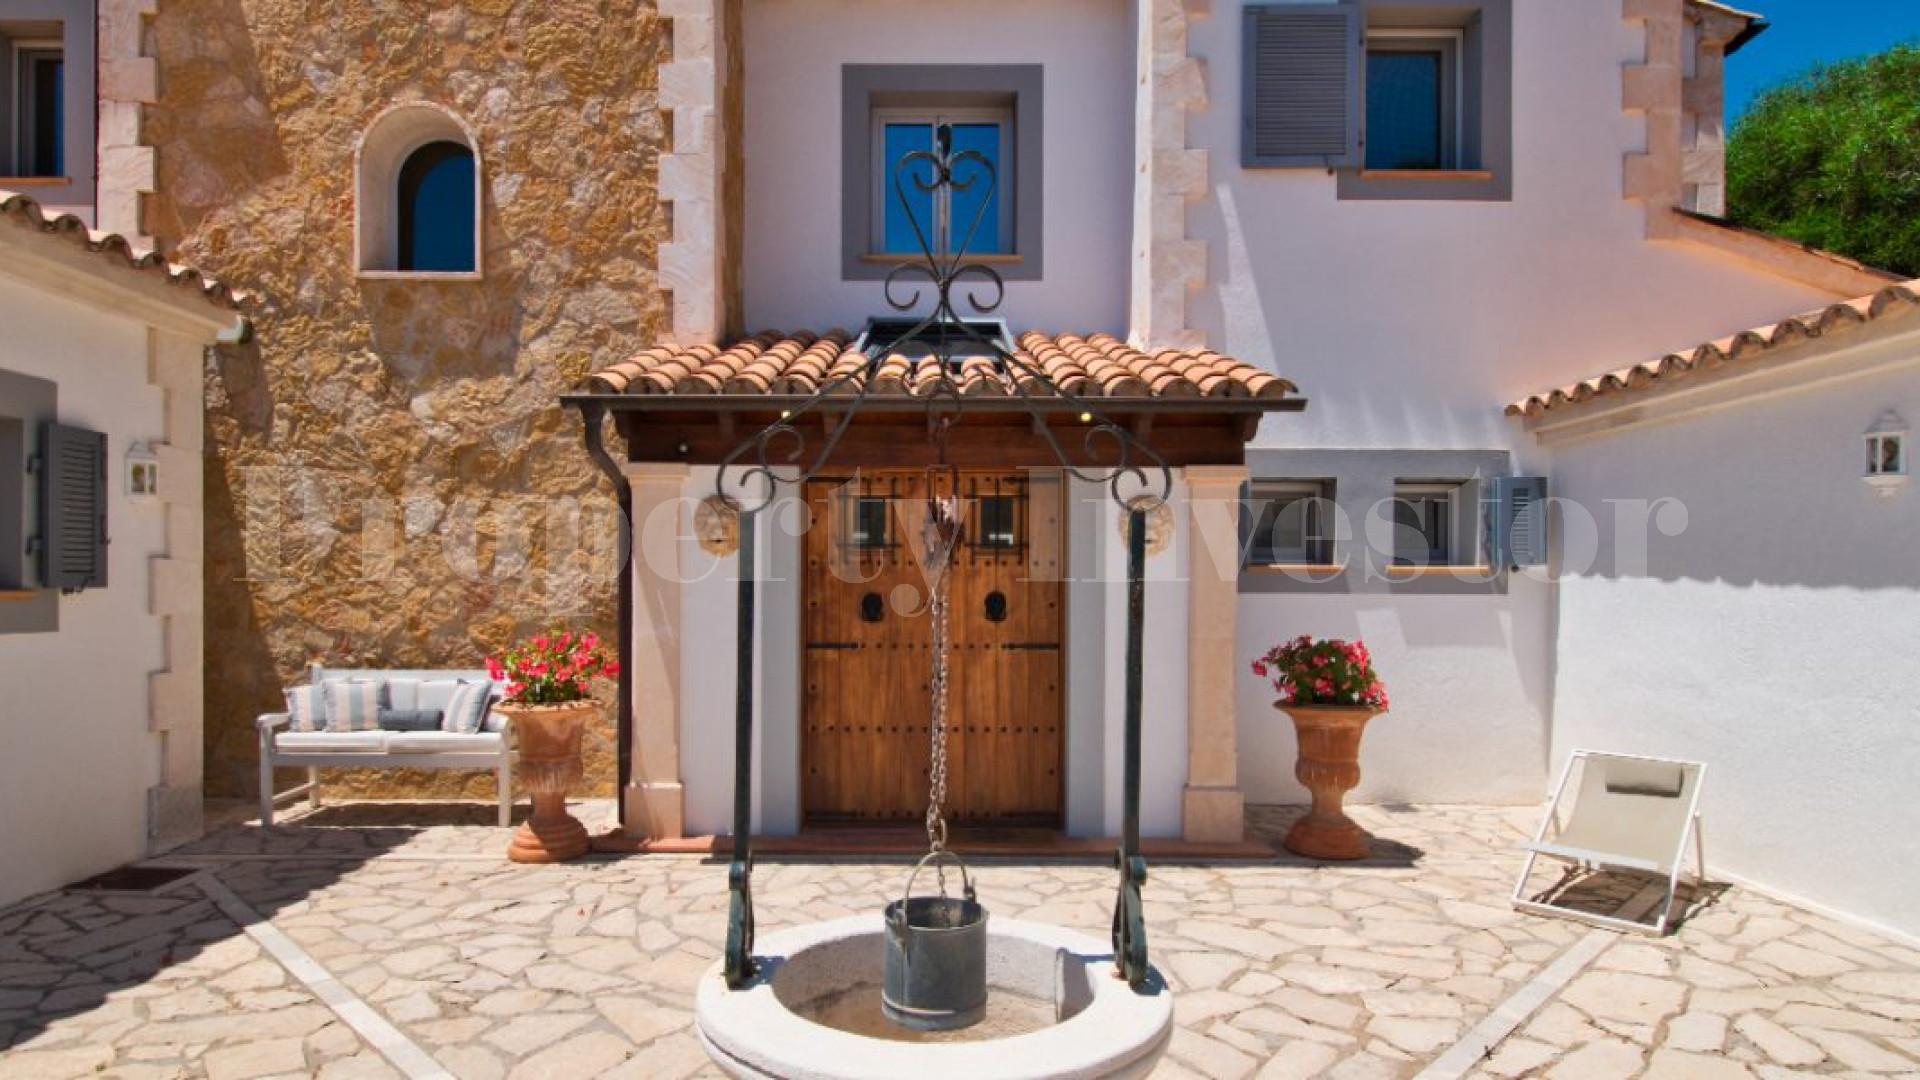 2 Traditional Mediterranean  Sea View Villas in Nova Santa Ponsa, Mallorca